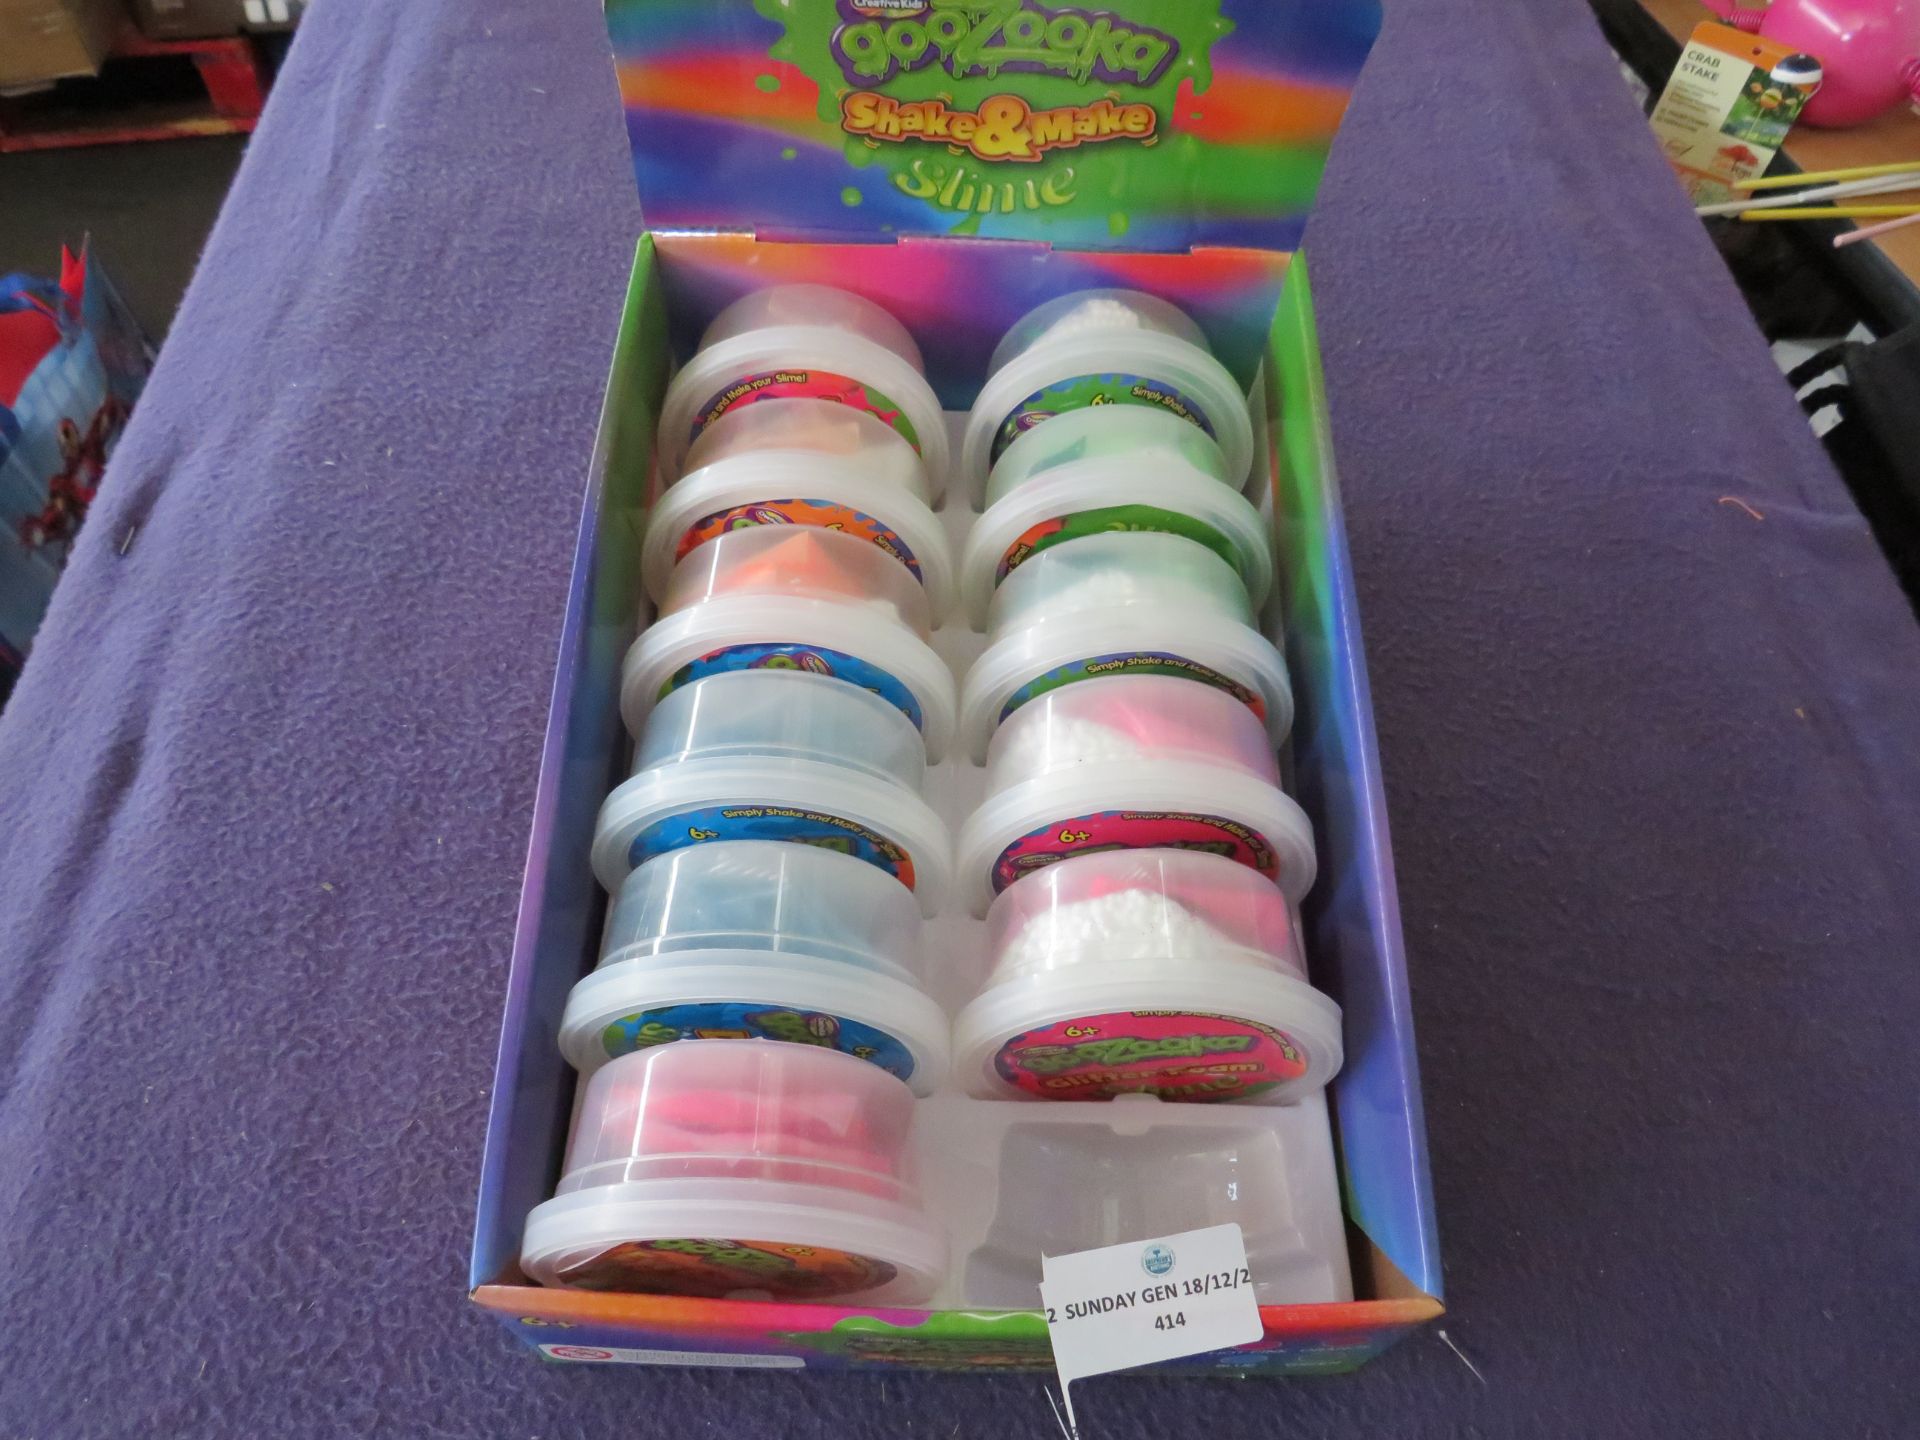 11x Creative Kids - Goozooka Shake & Make Slime ( Assorted Colours ) - Unused & Boxed.